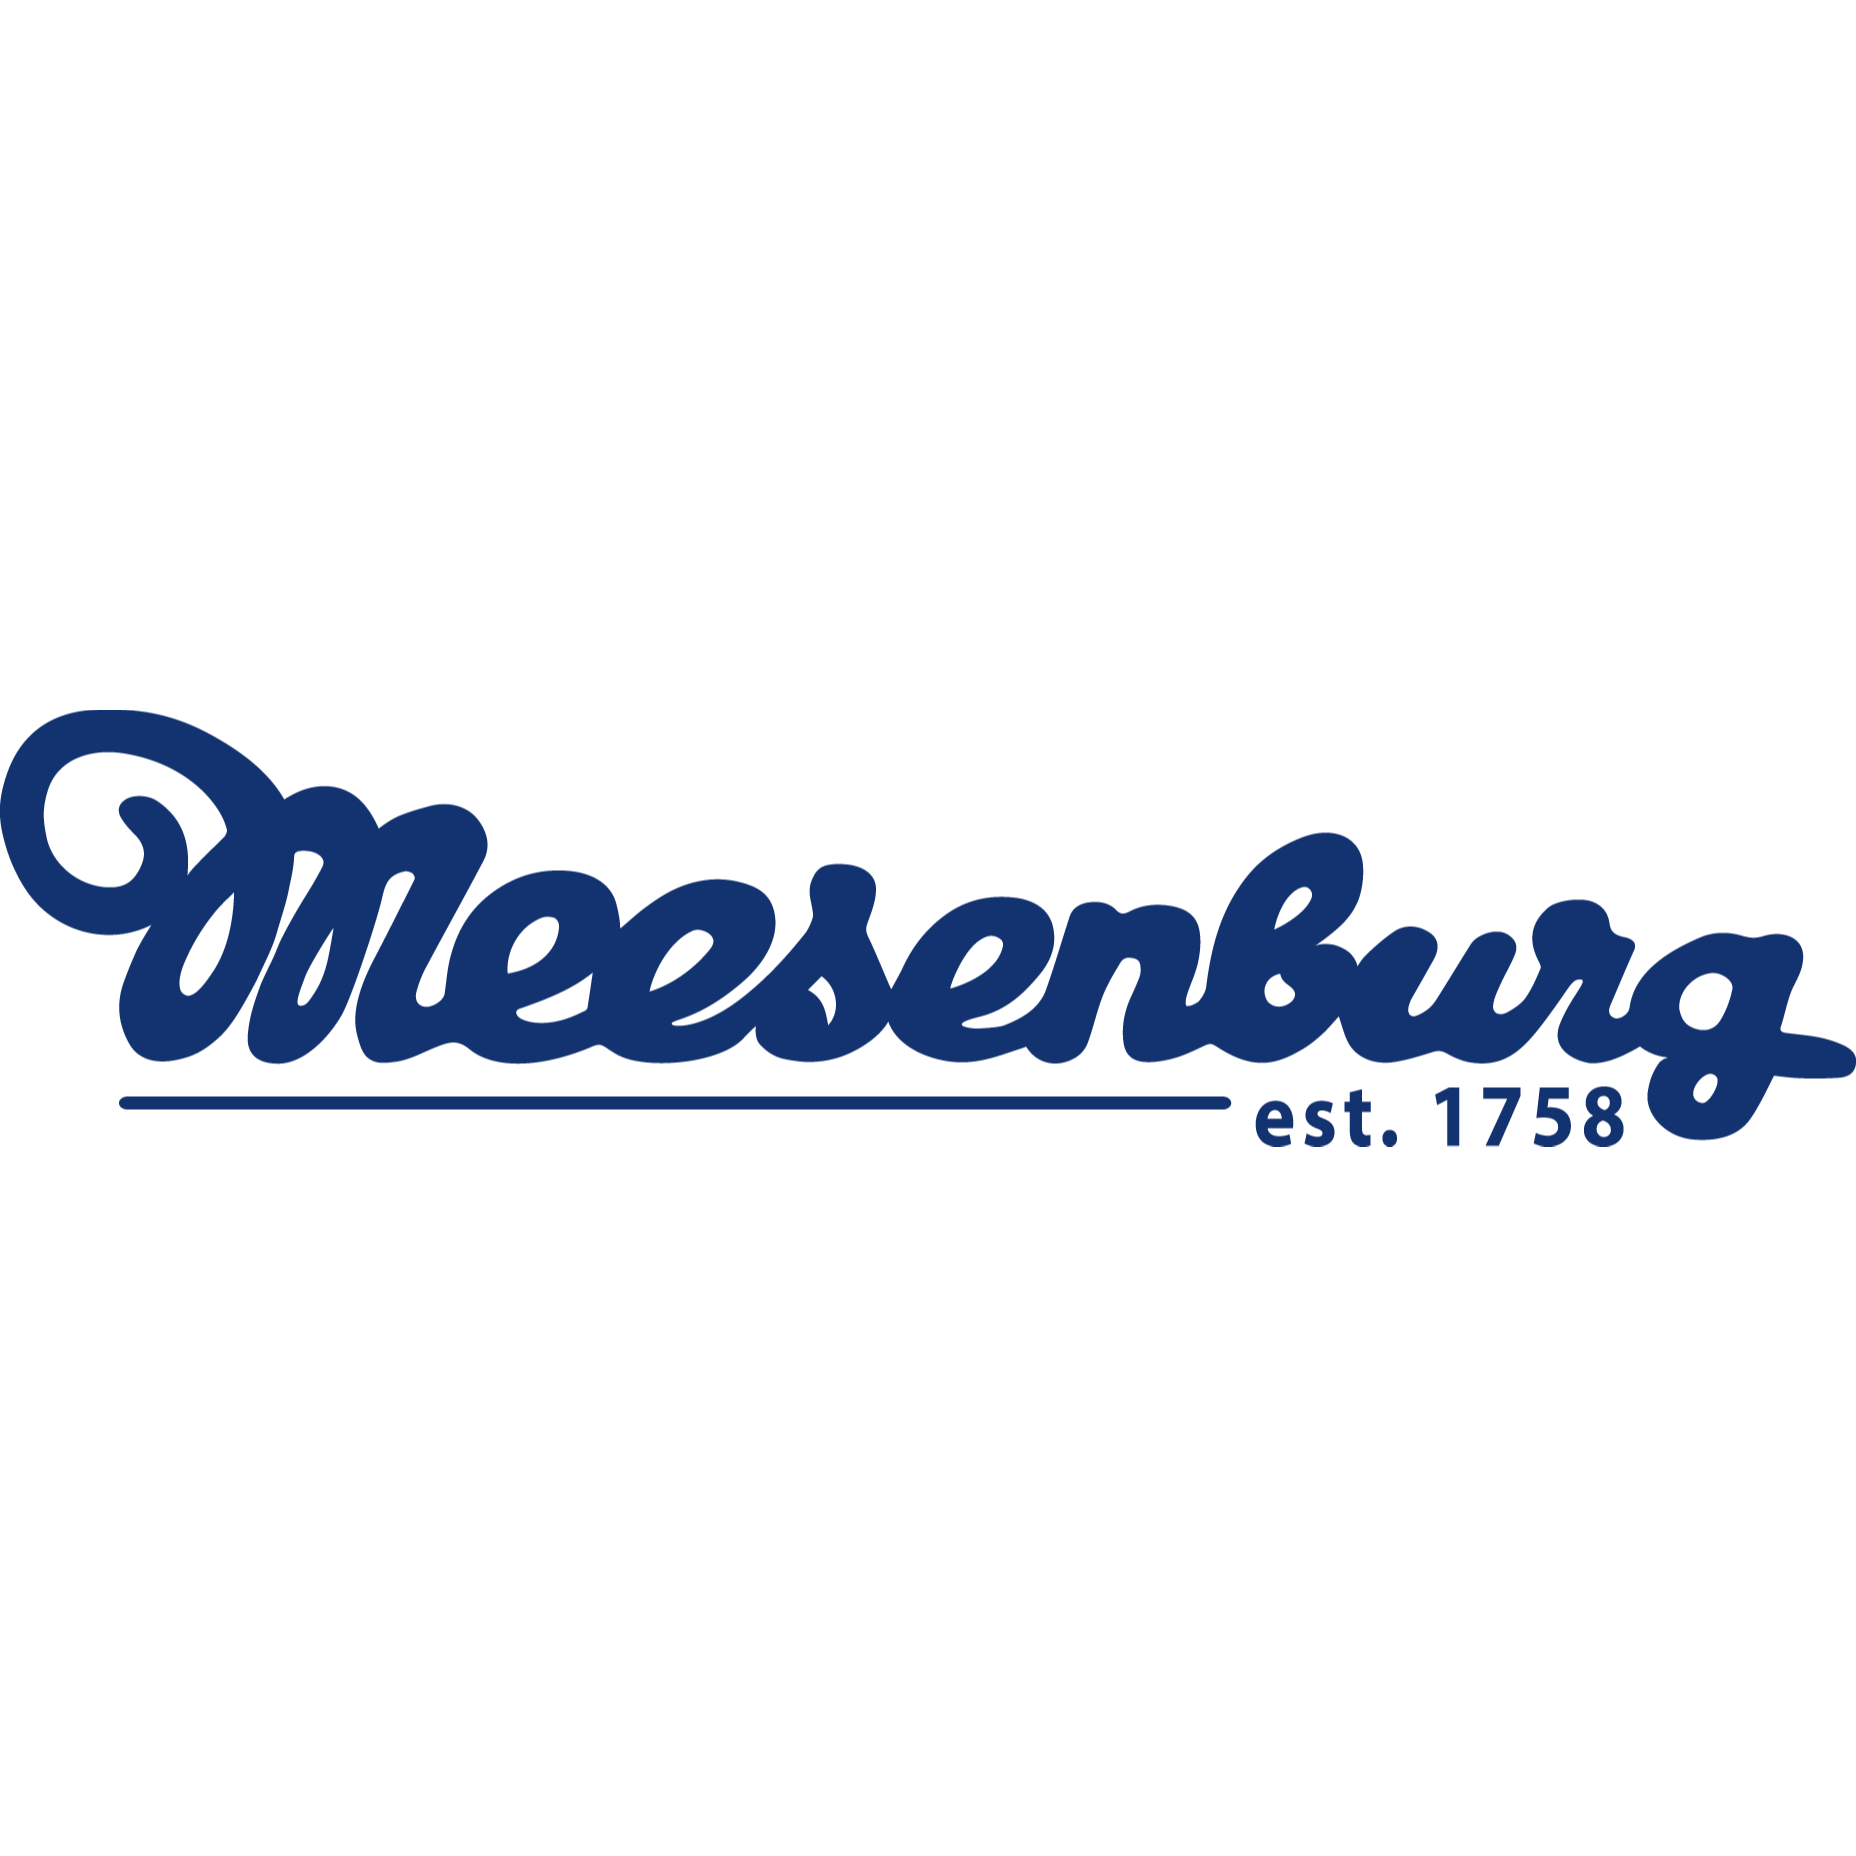 Meesenburg GmbH & Co. KG in Oldenburg in Oldenburg in Oldenburg - Logo